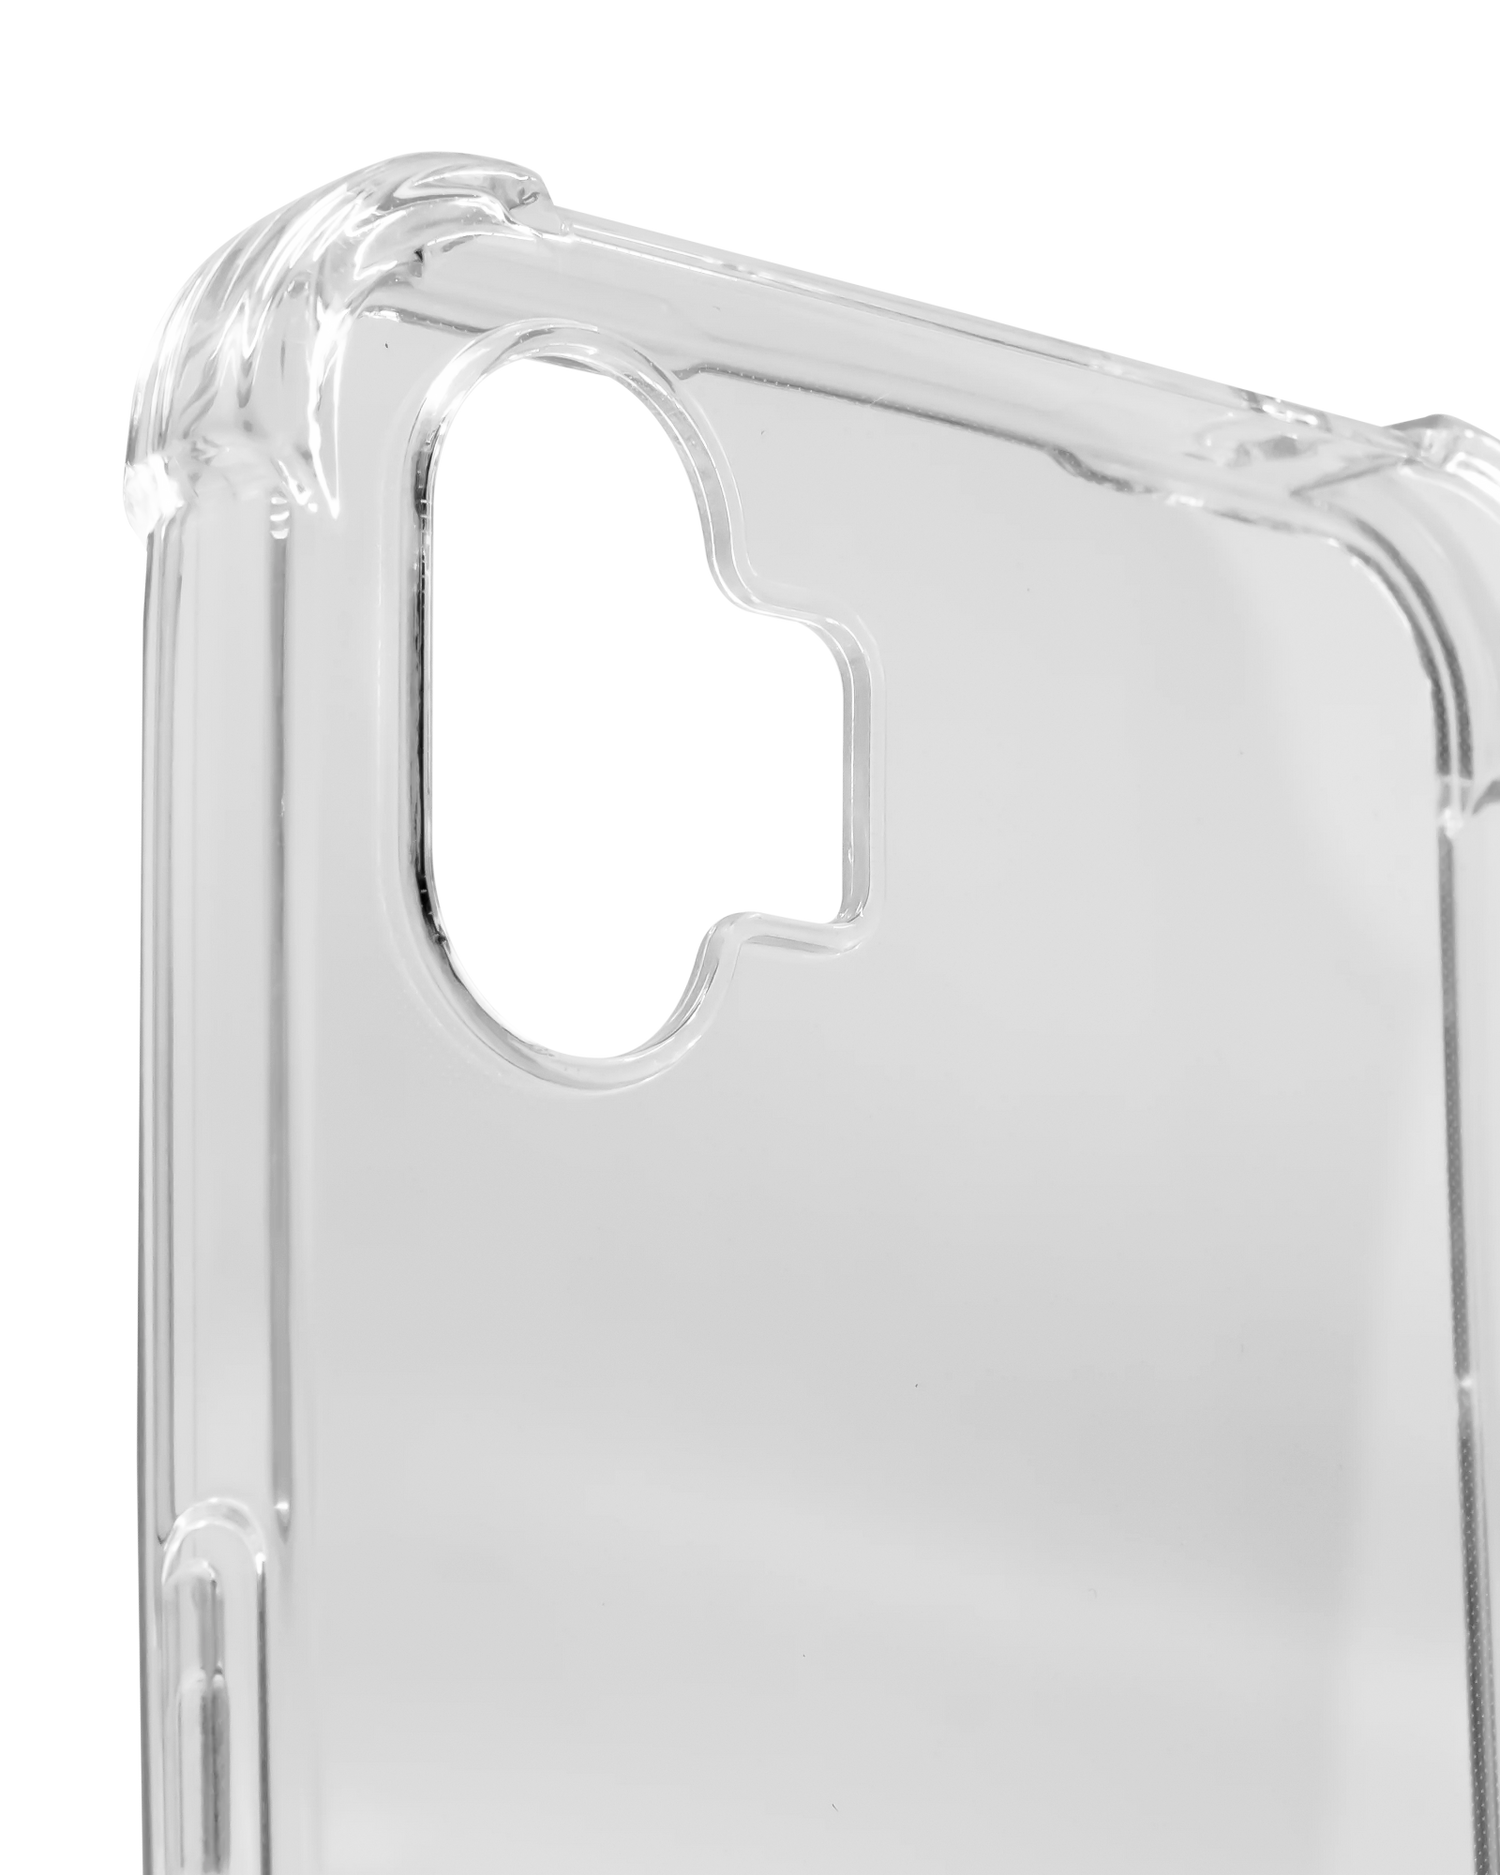 Carcasa Transparente Compatible Nothing Phone 1 Color Blanco